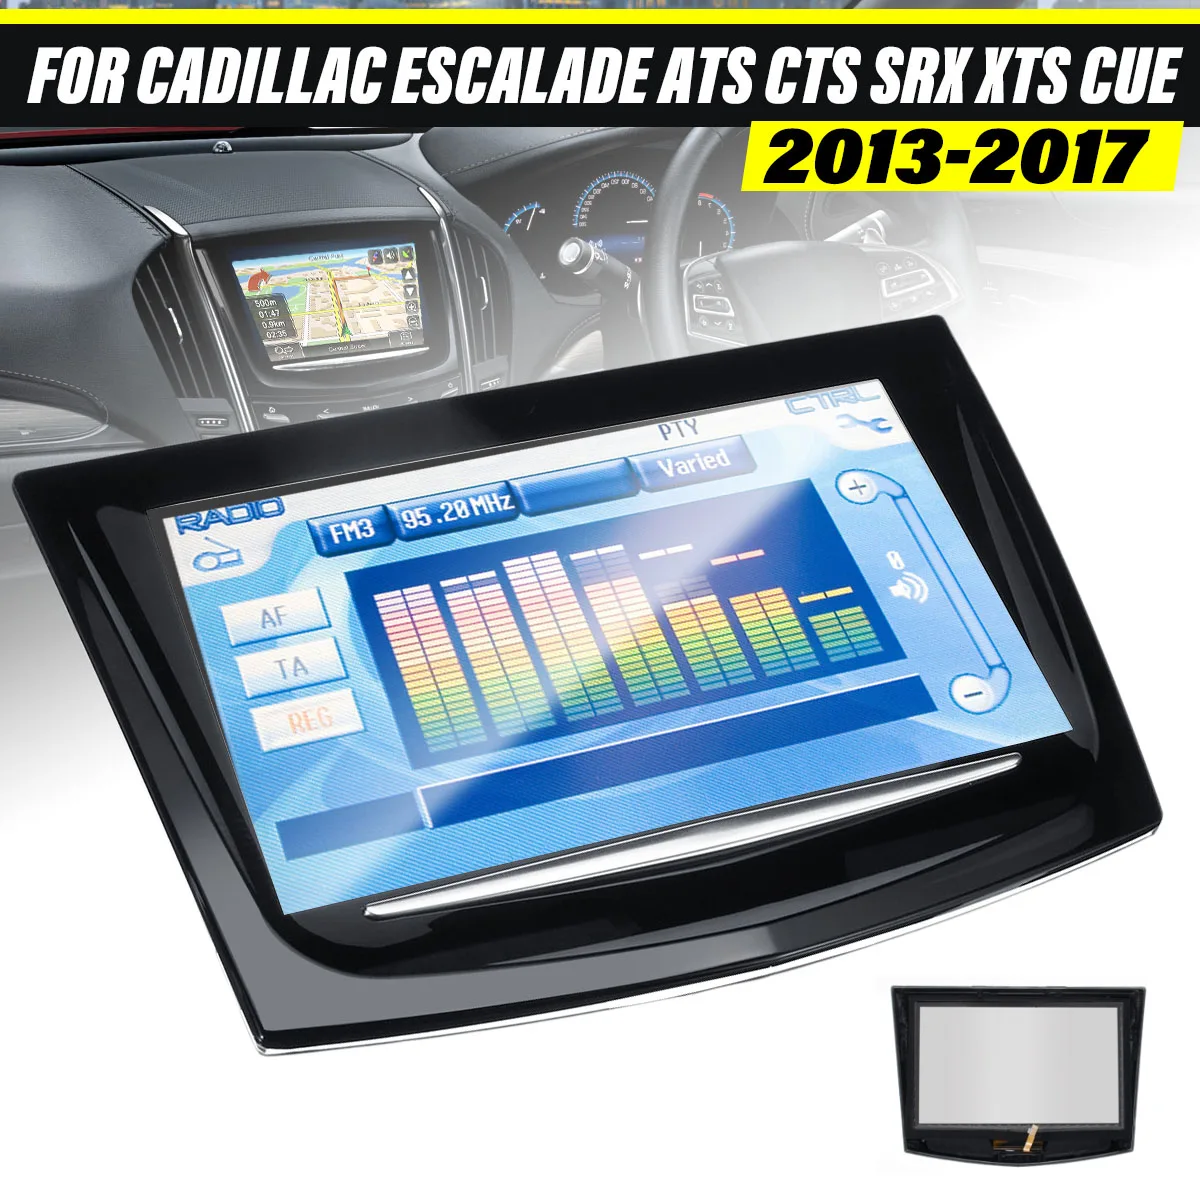 

Car Touch Screen Display For Cadillac Escalade ATS SRX XTS GTS CUE 2013-2017 Sense 23106488 With Screen Installation Tools